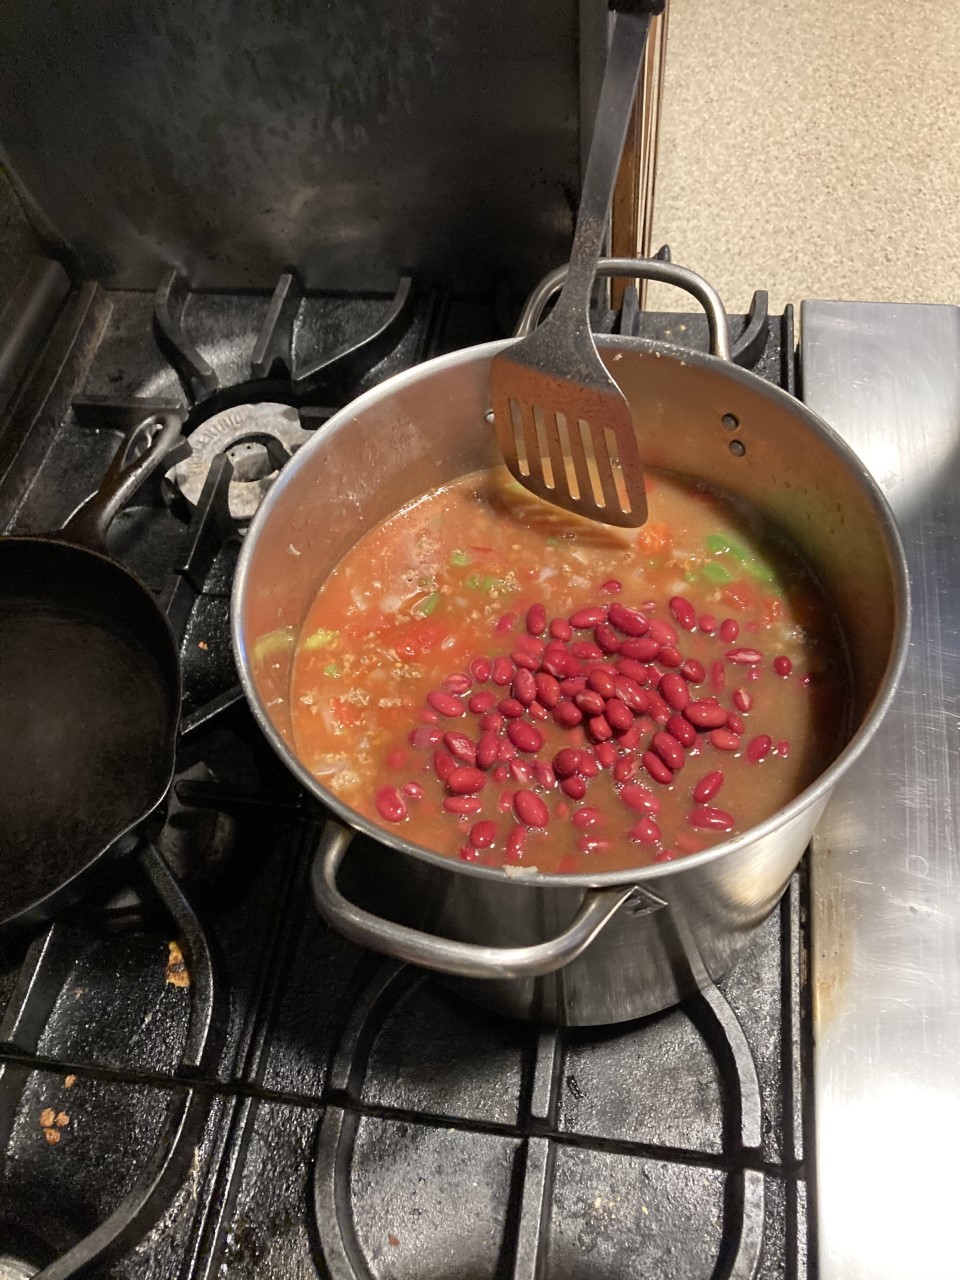 pot of chili